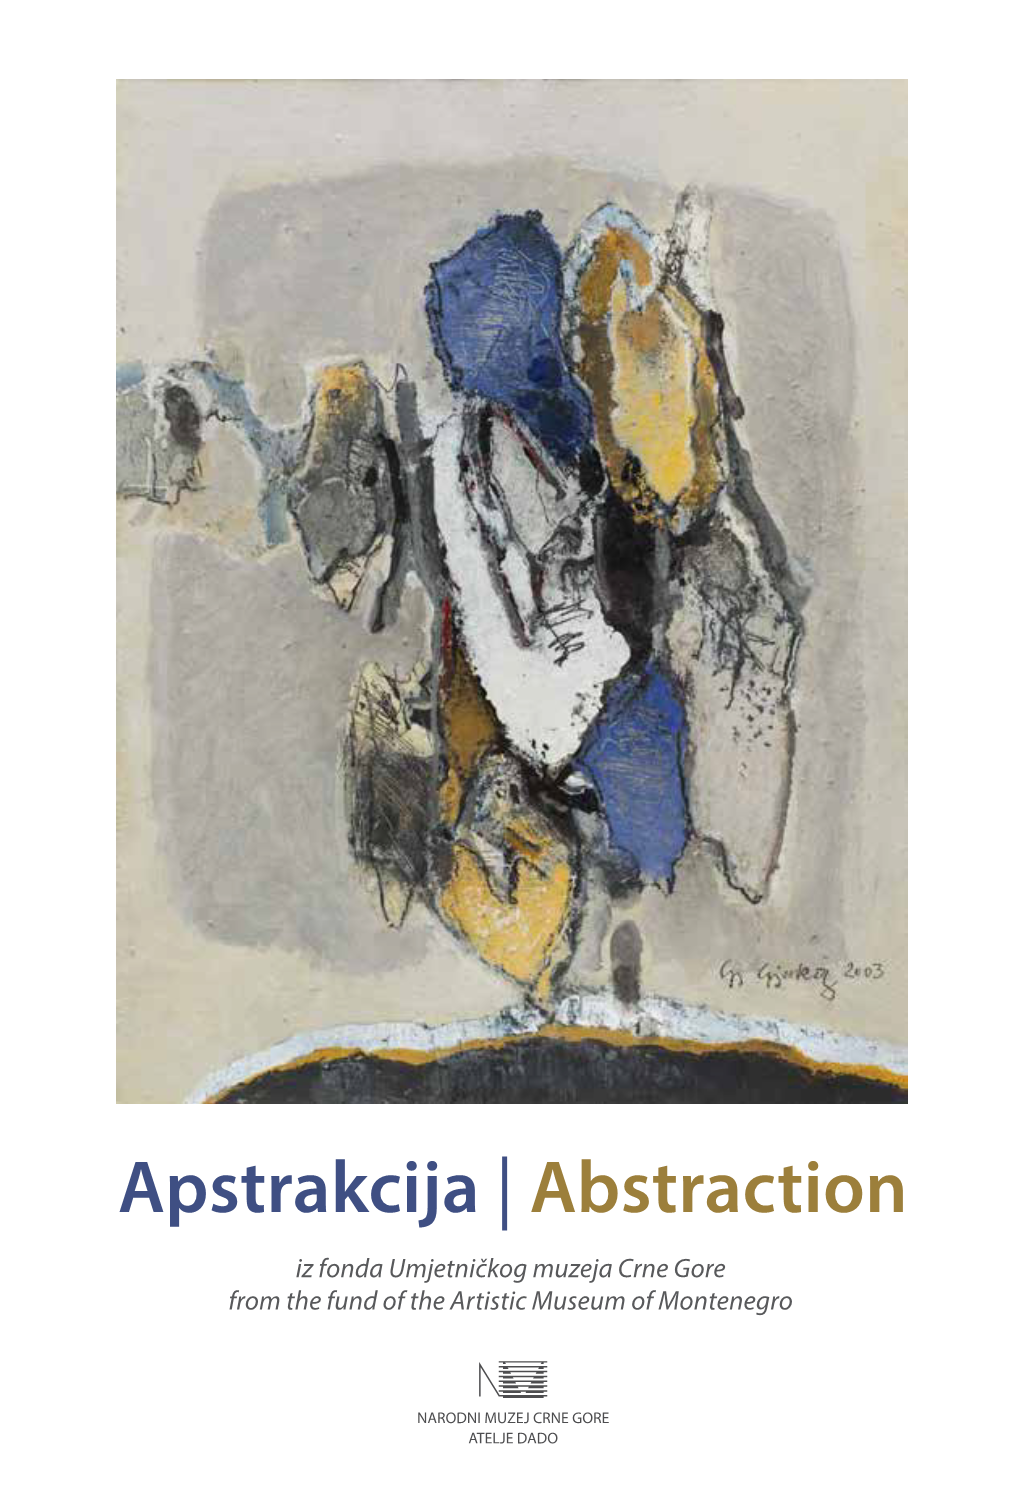 Apstrakcija | Abstraction Iz Fonda Umjetničkog Muzeja Crne Gore from the Fund of the Artistic Museum of Montenegro